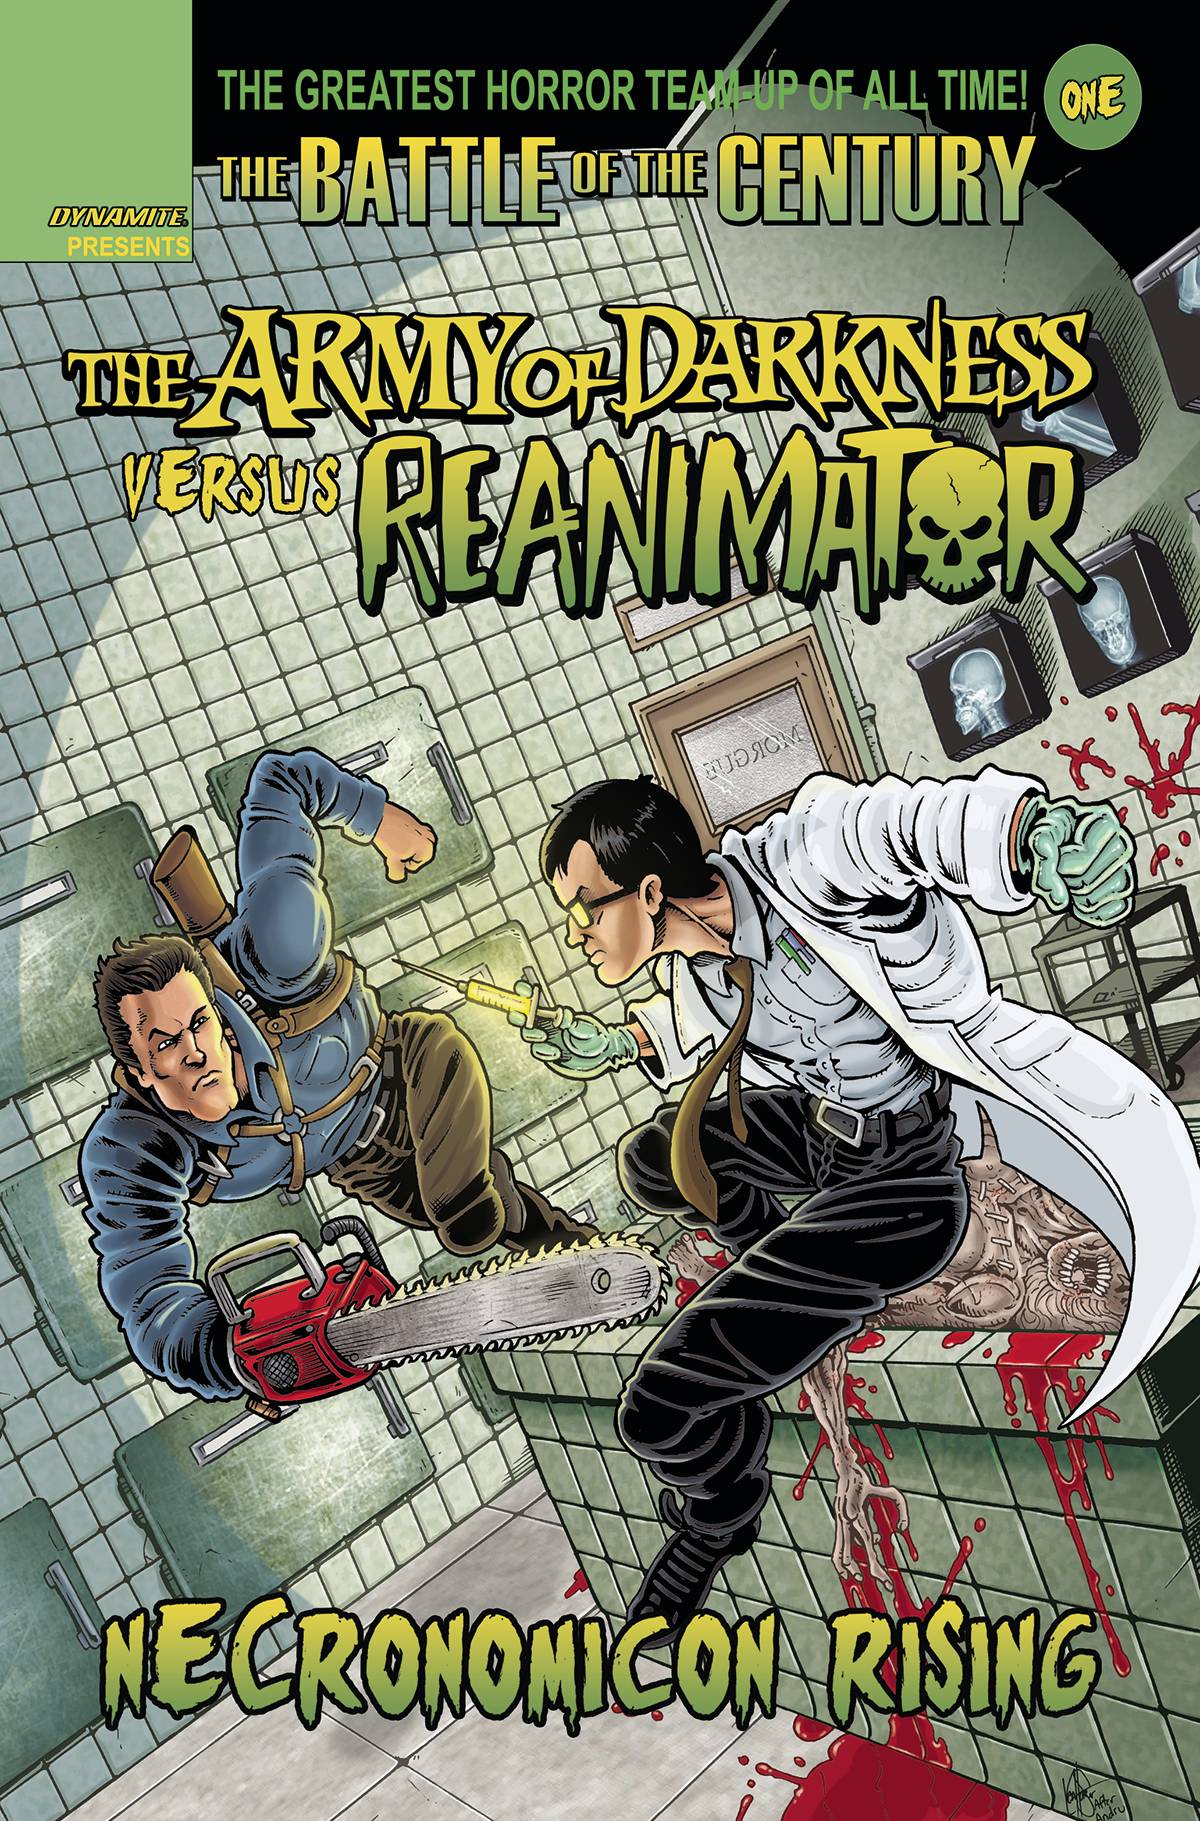 Reanimator vs army of darkness